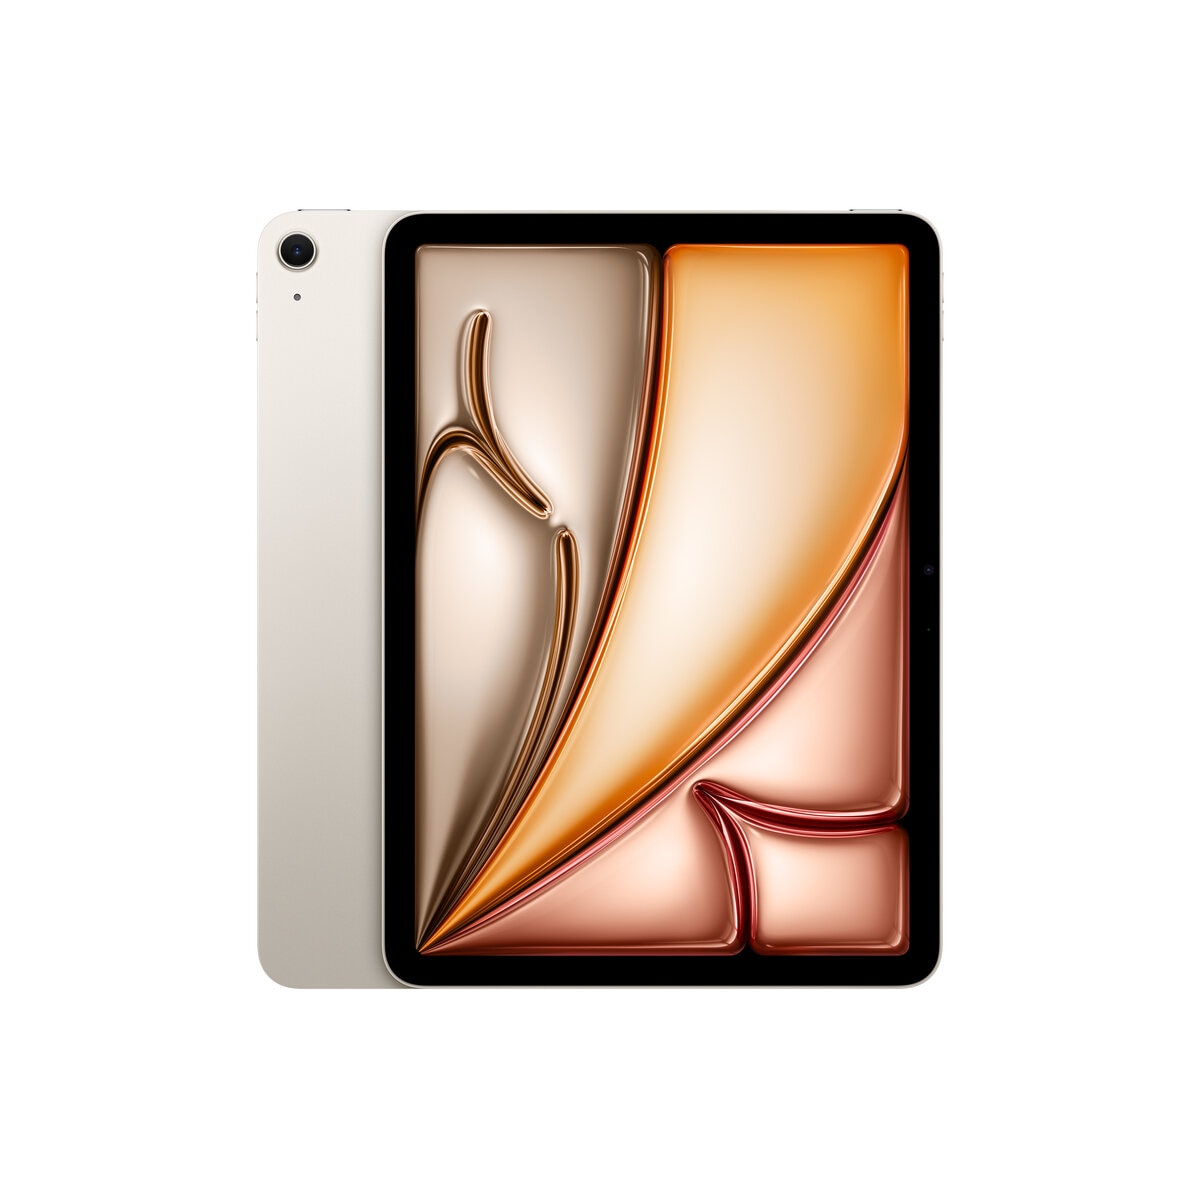 Apple iPad Air 11インチ M2 WiFi 256GB